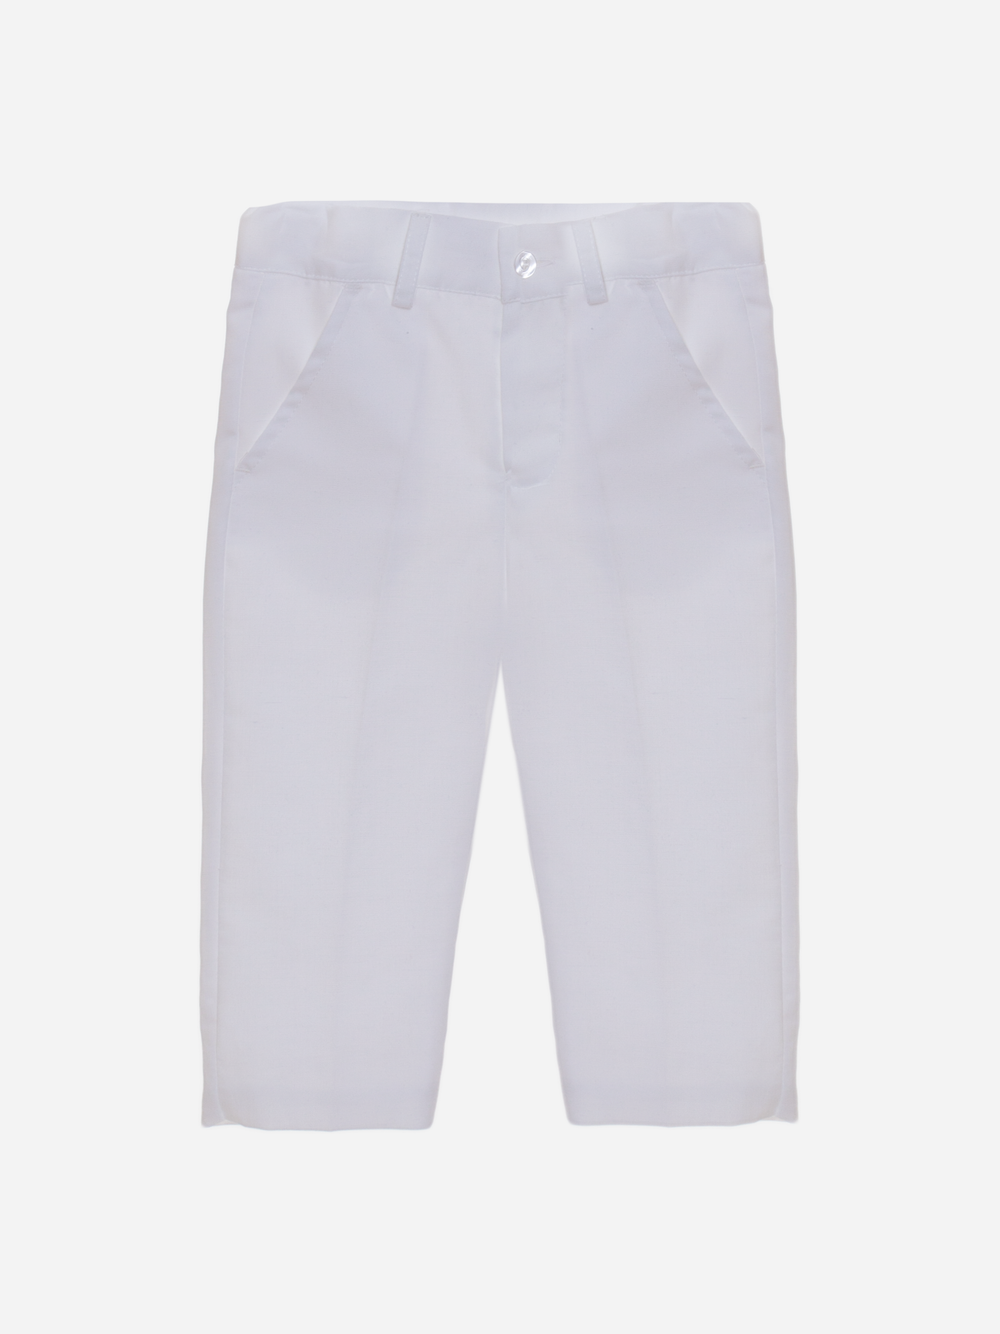 White linen boys pants